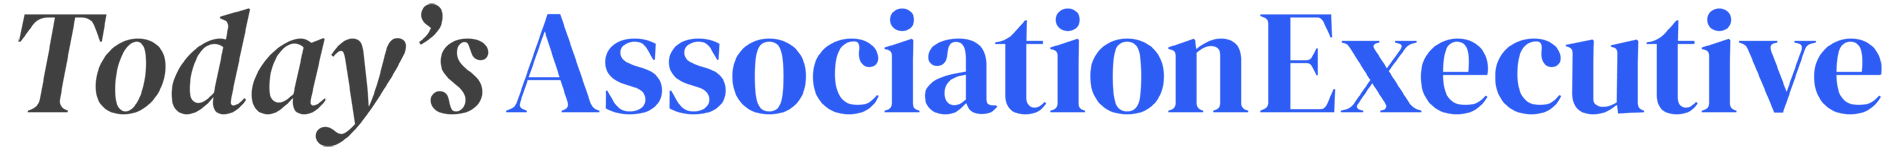 Today's Association Executive logo